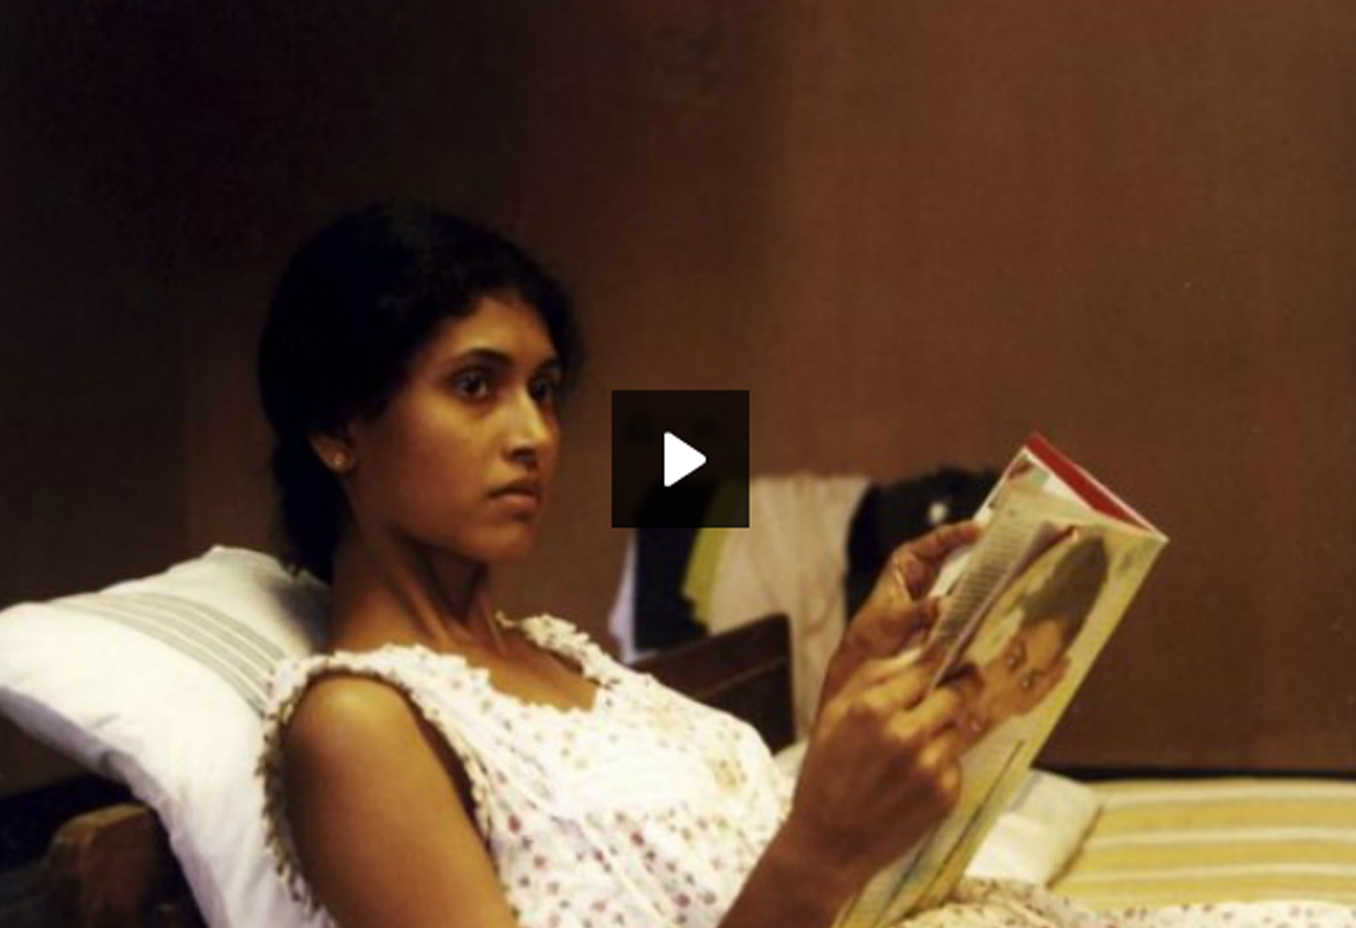 Srilankan movies nude scene - Nude photos